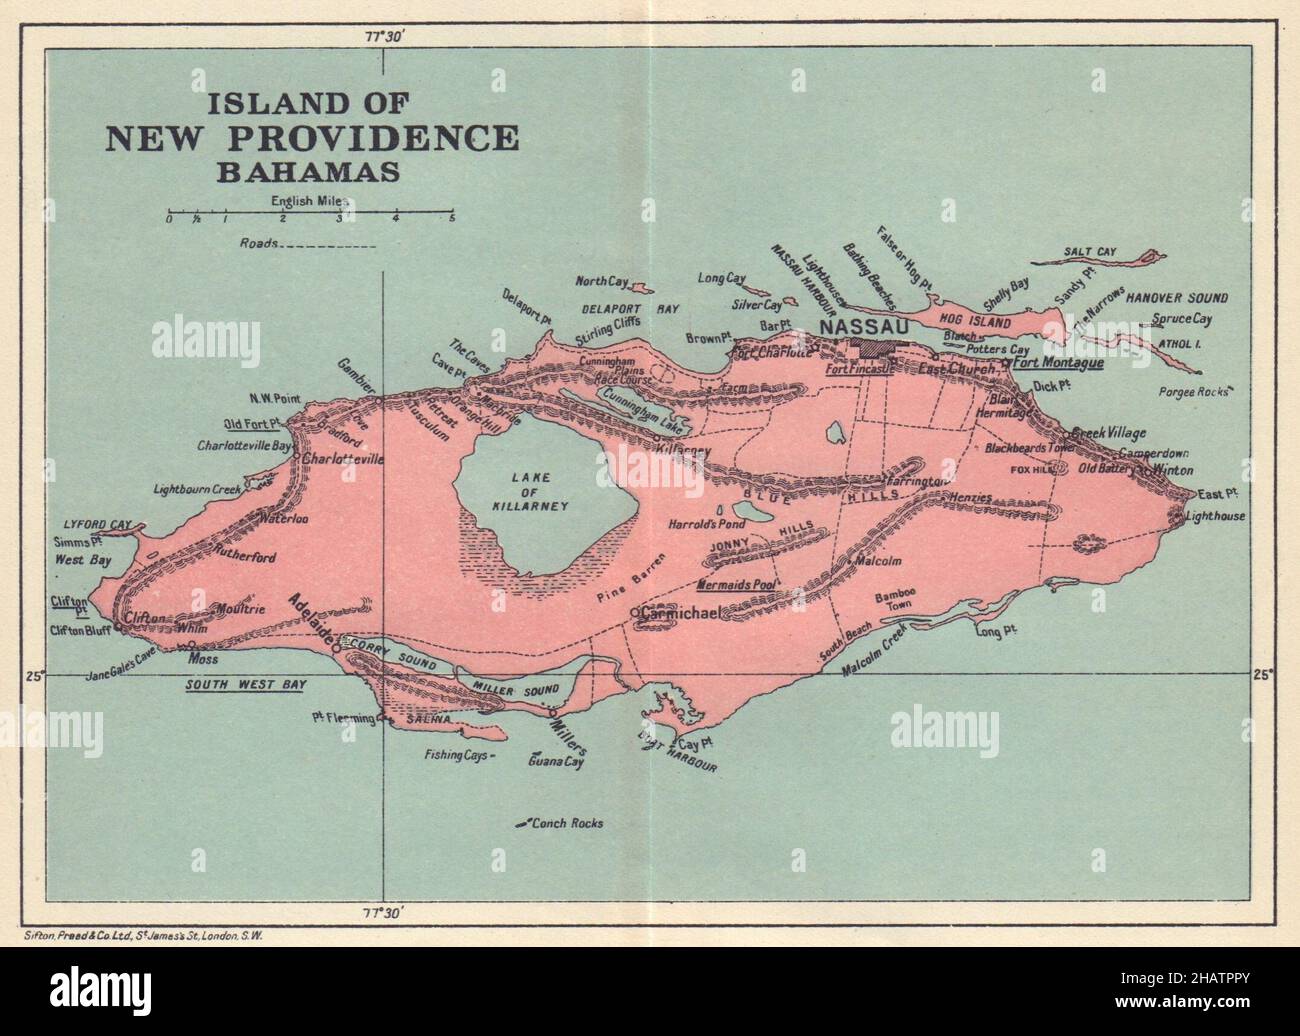 NEW PROVIDENCE. Vintage map. Bahamas. Caribbean 1923 old vintage chart Stock Photo